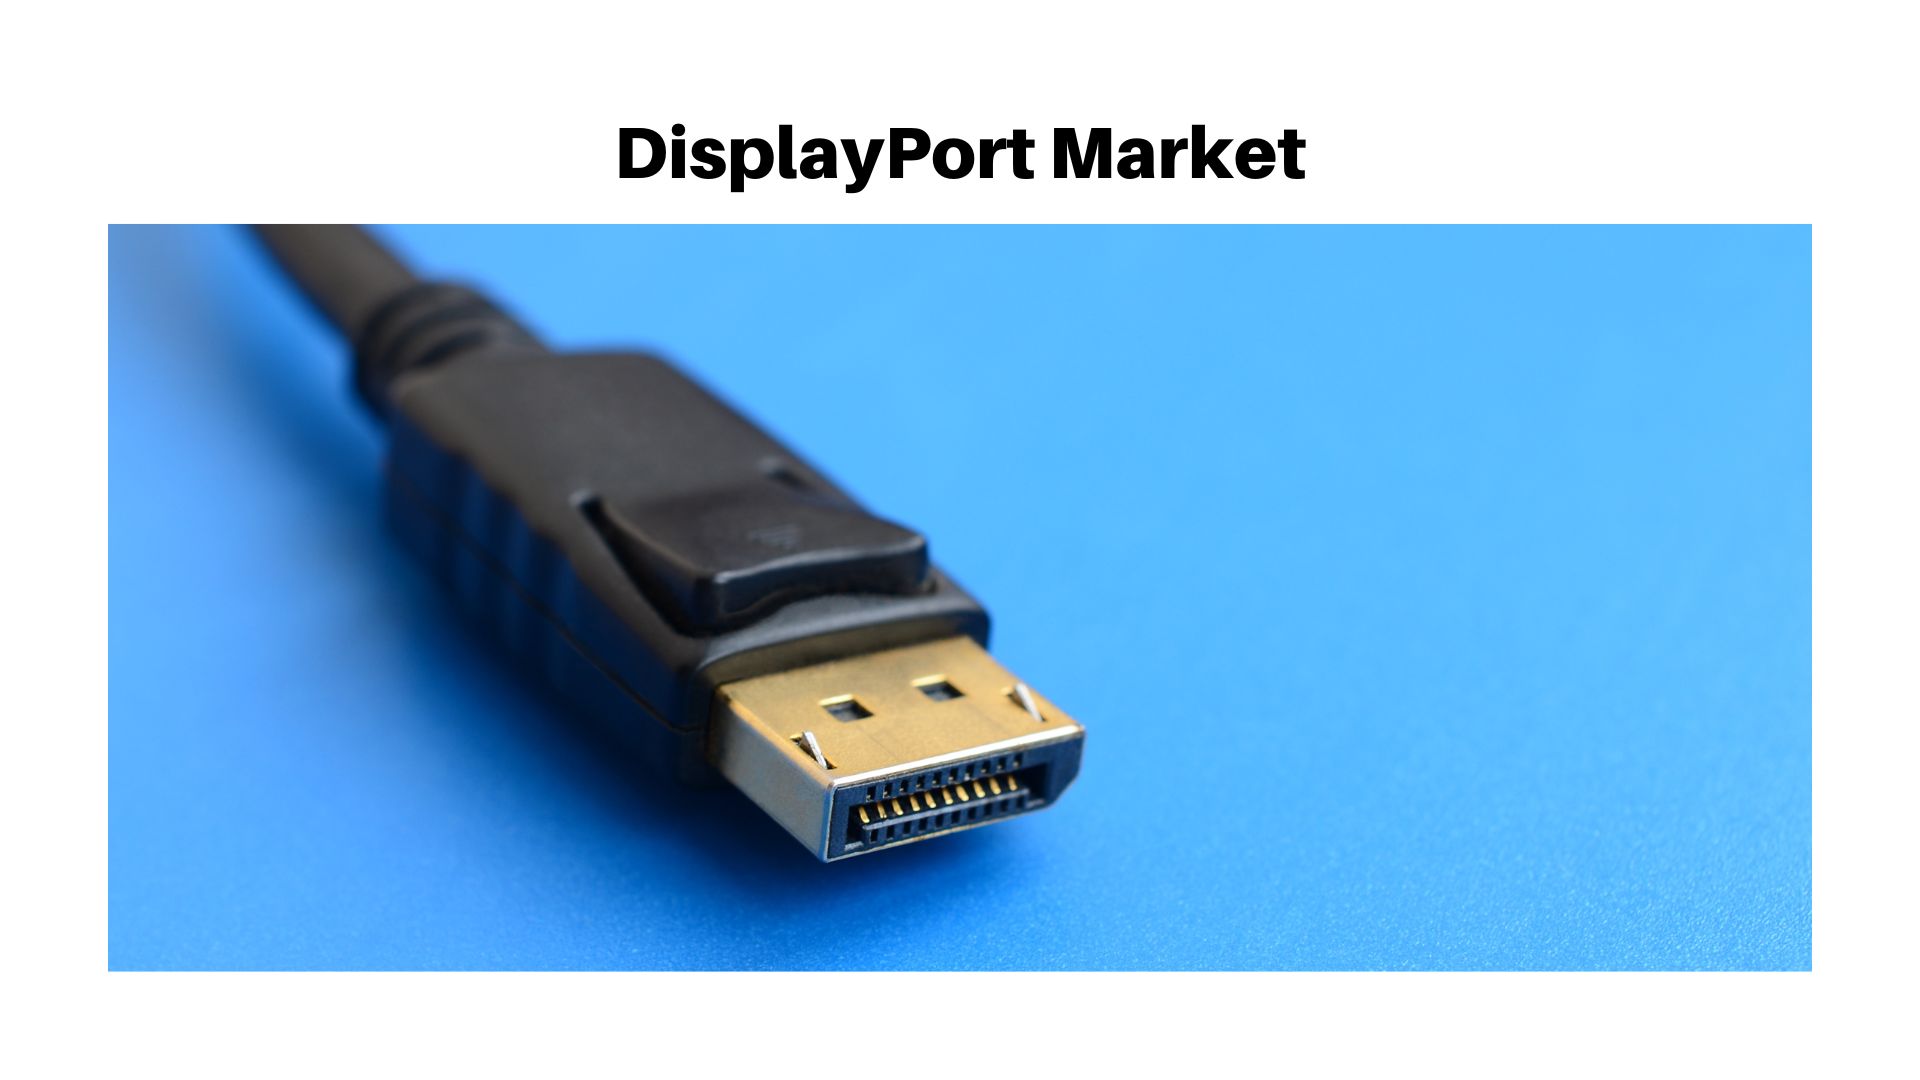 Global DisplayPort Market Is Forecast To Reach USD 15.80 Billion by 2032